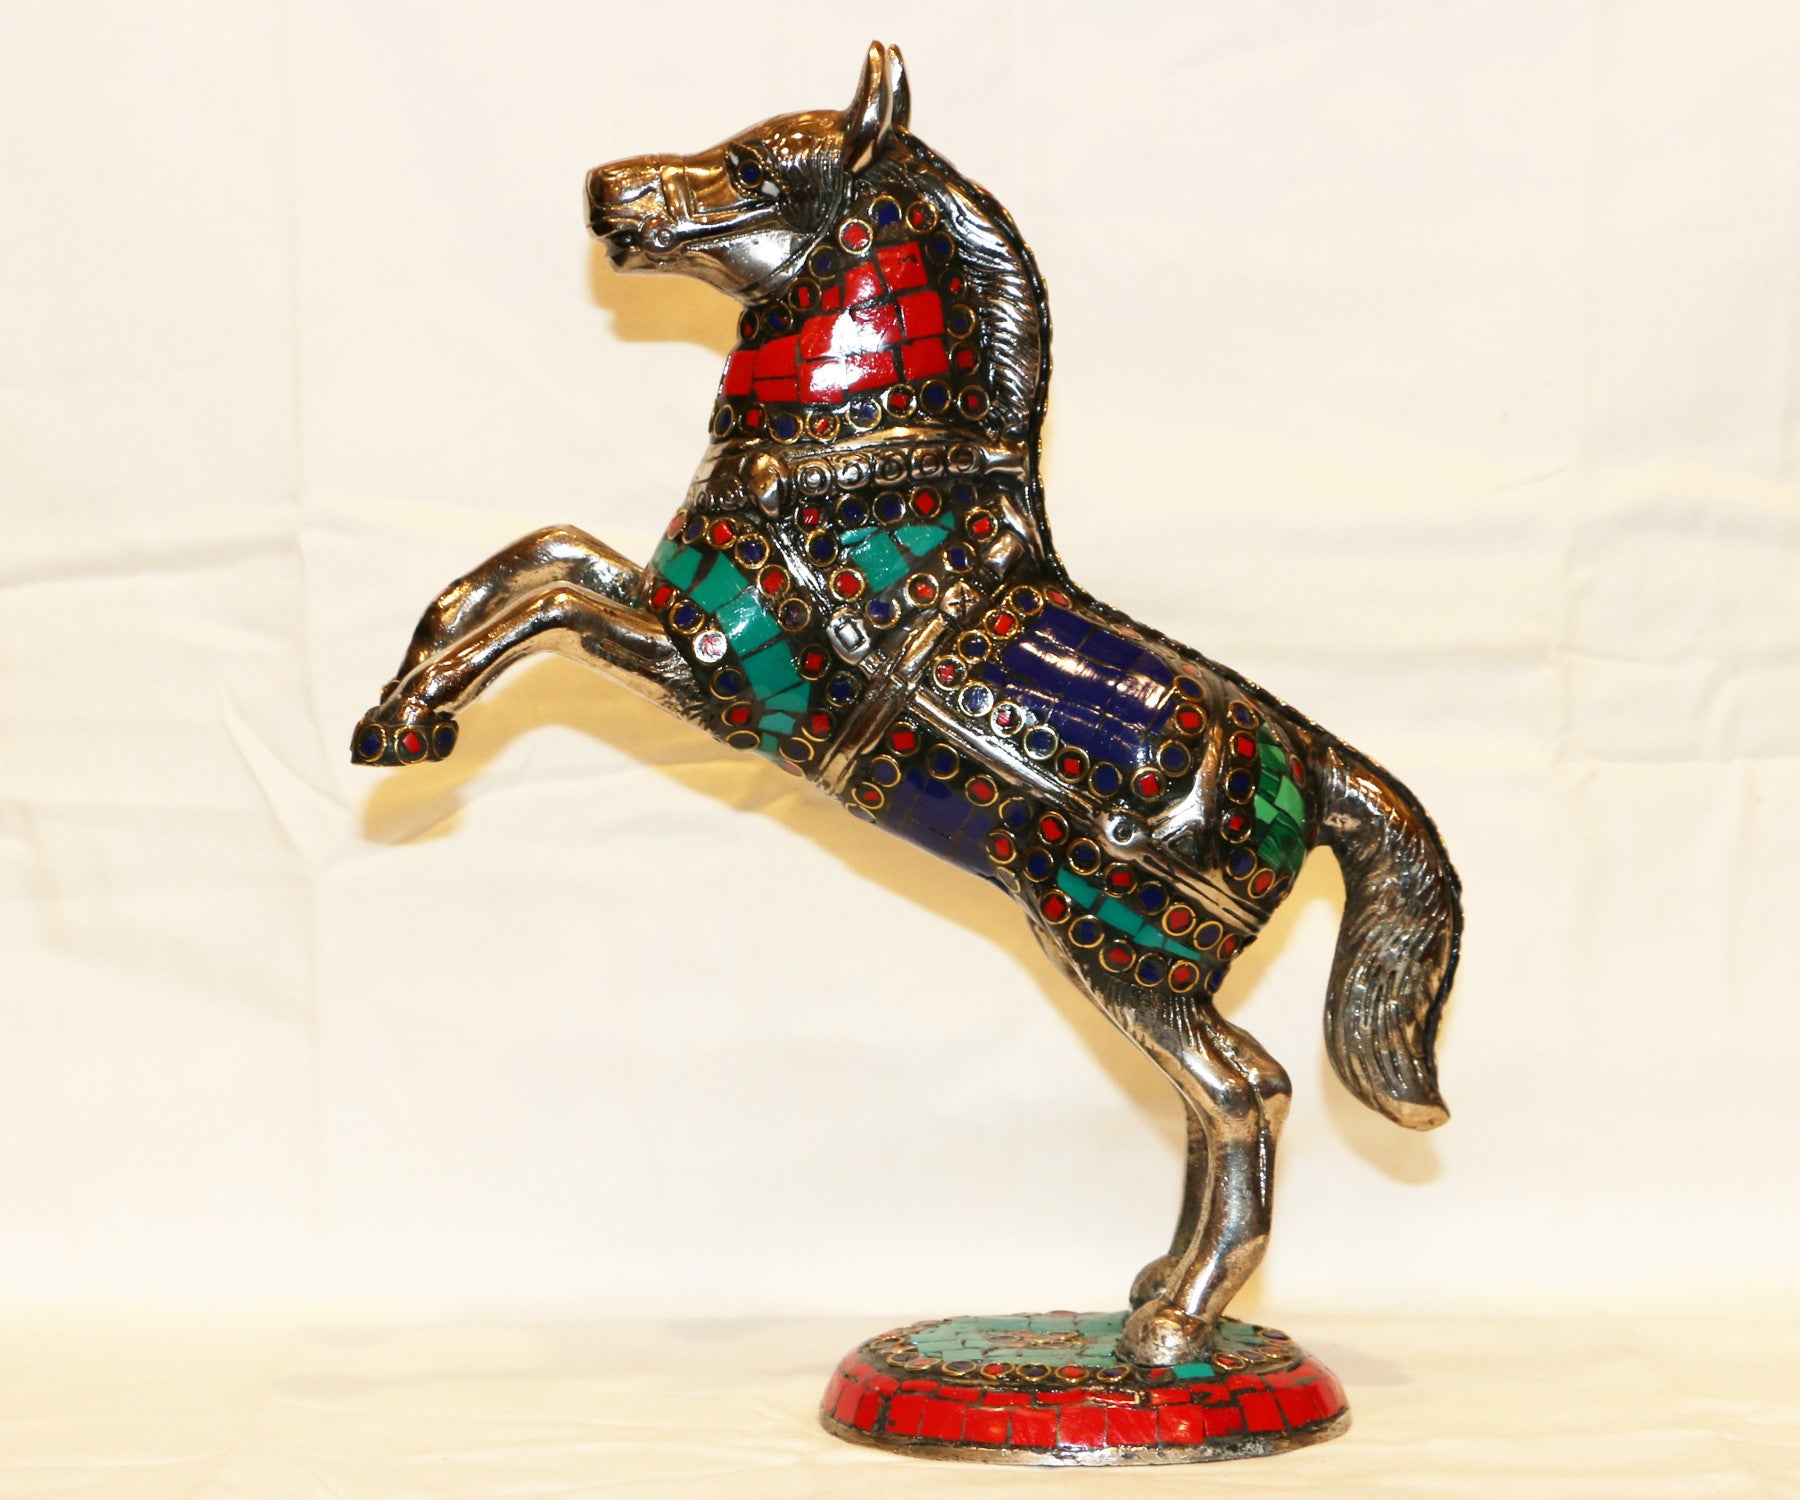 Galloping horse - Tibet Arts & Healing